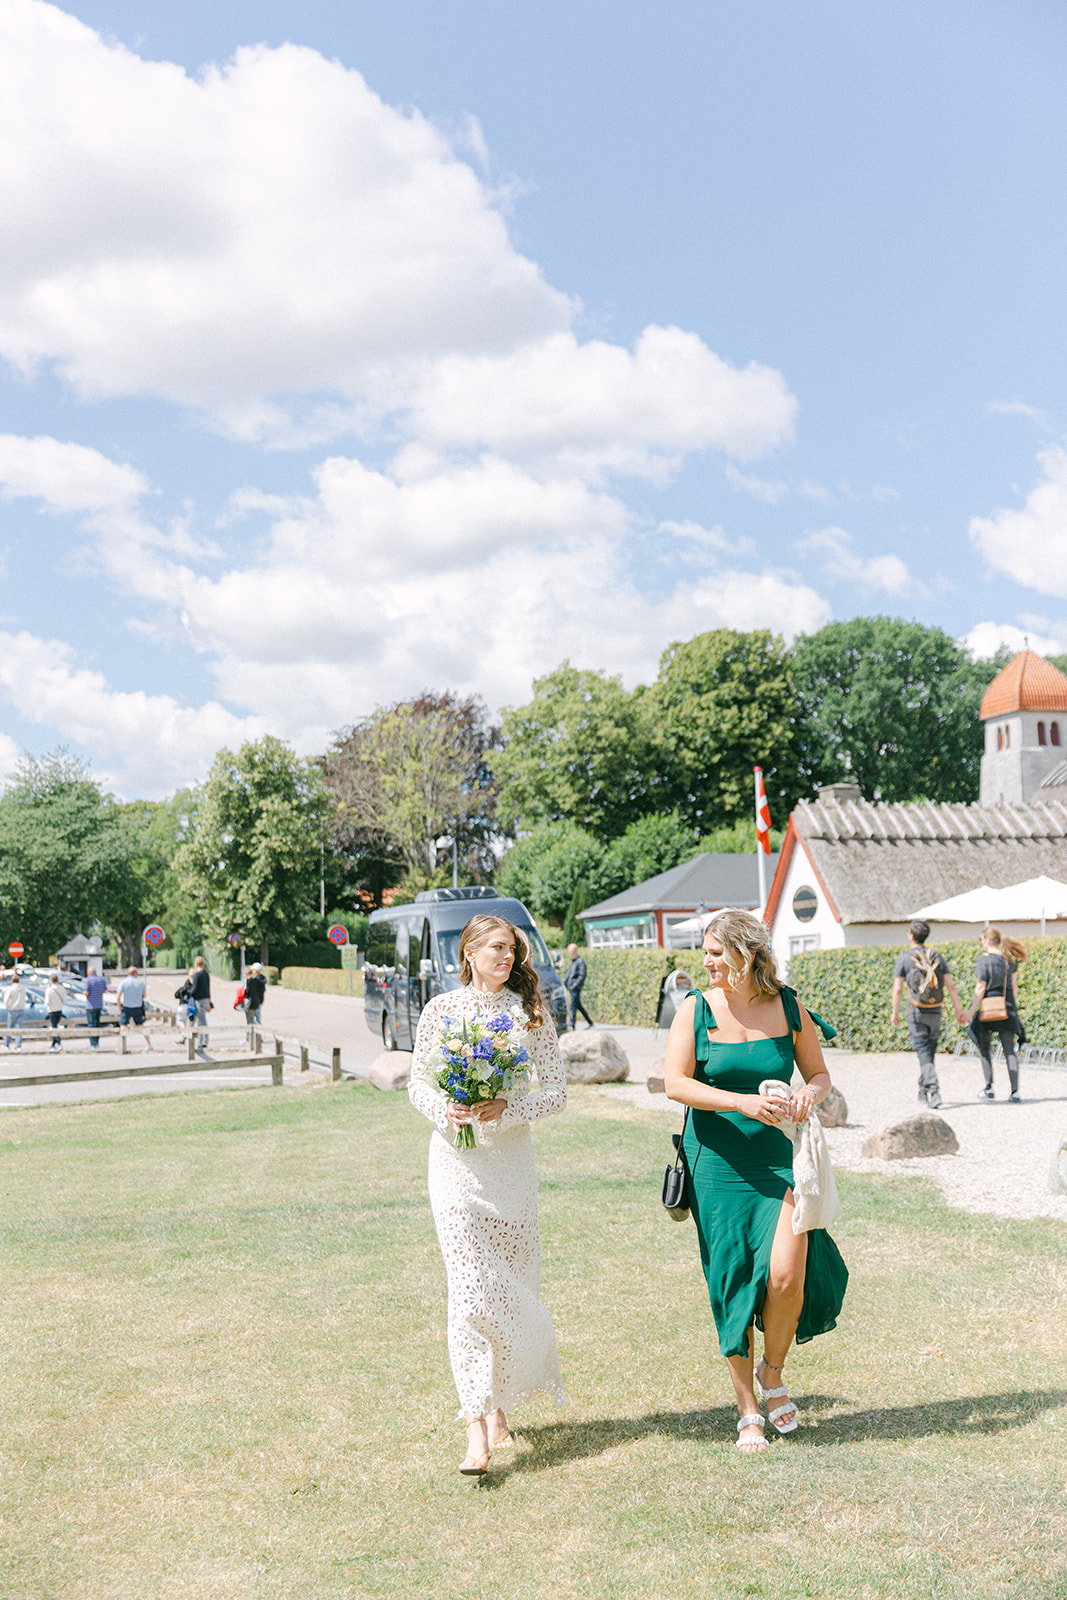 Romantic Summer Elopement - Get Married in Denmark's Stevns Klin